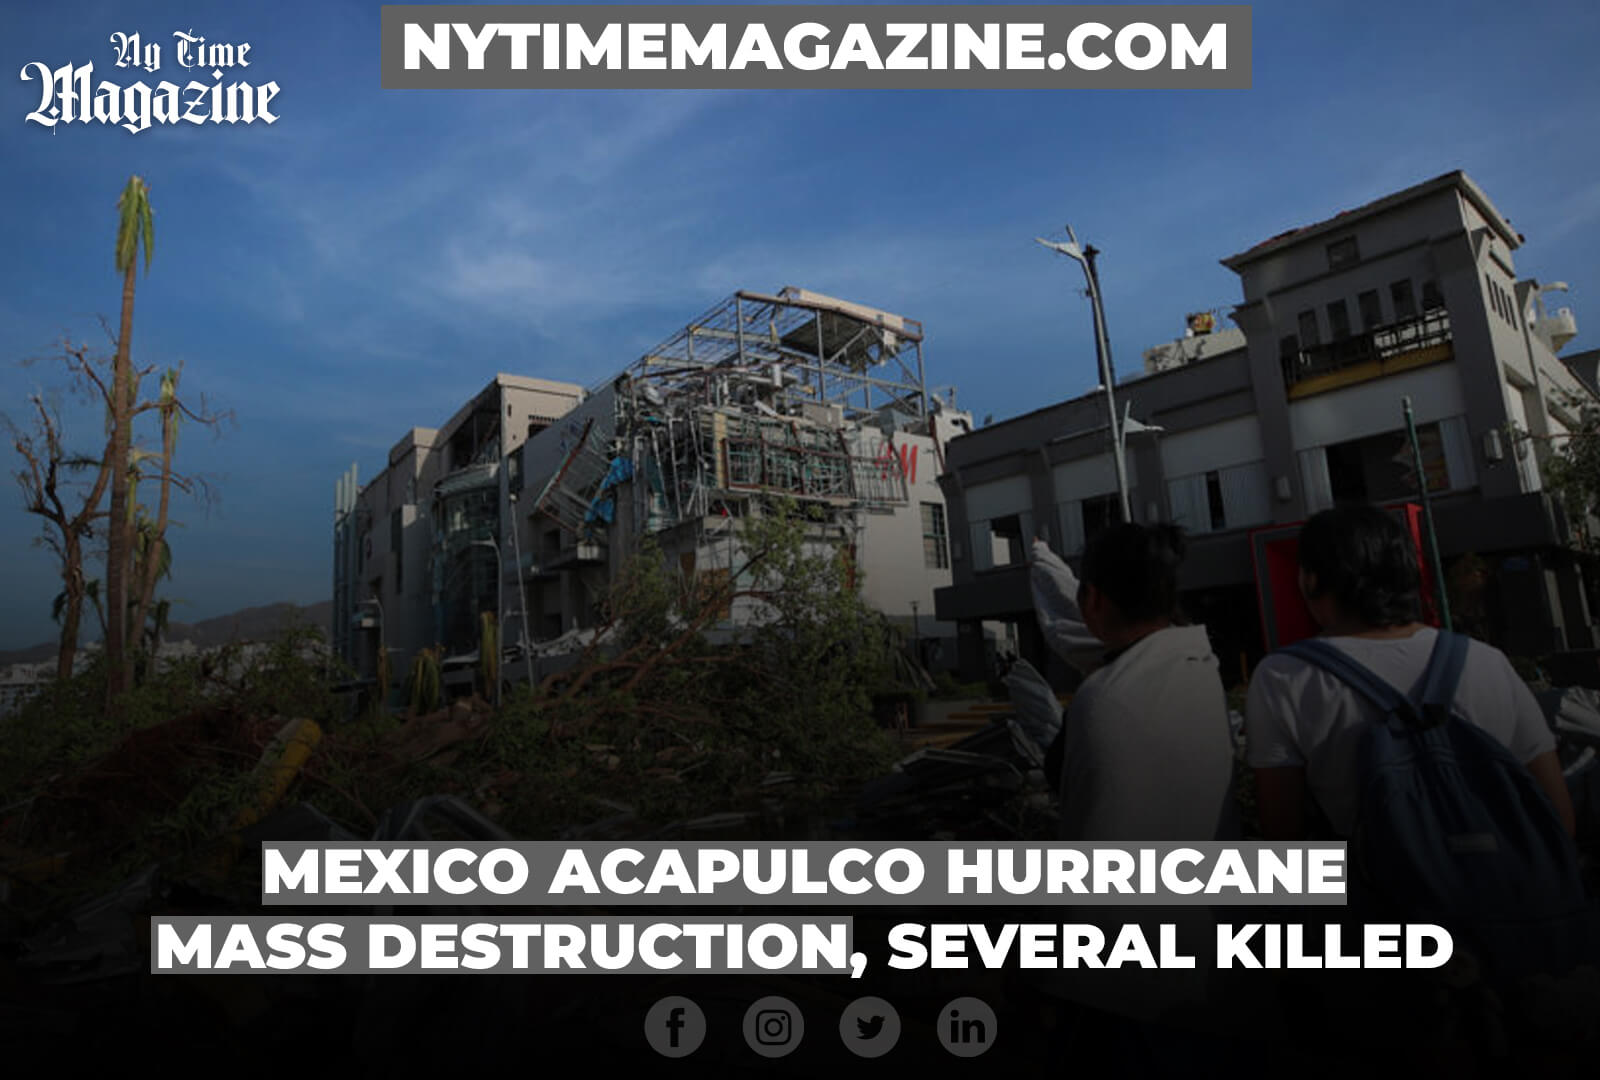 Mexico Acapulco Hurricane: Mass Destruction, Several Killed